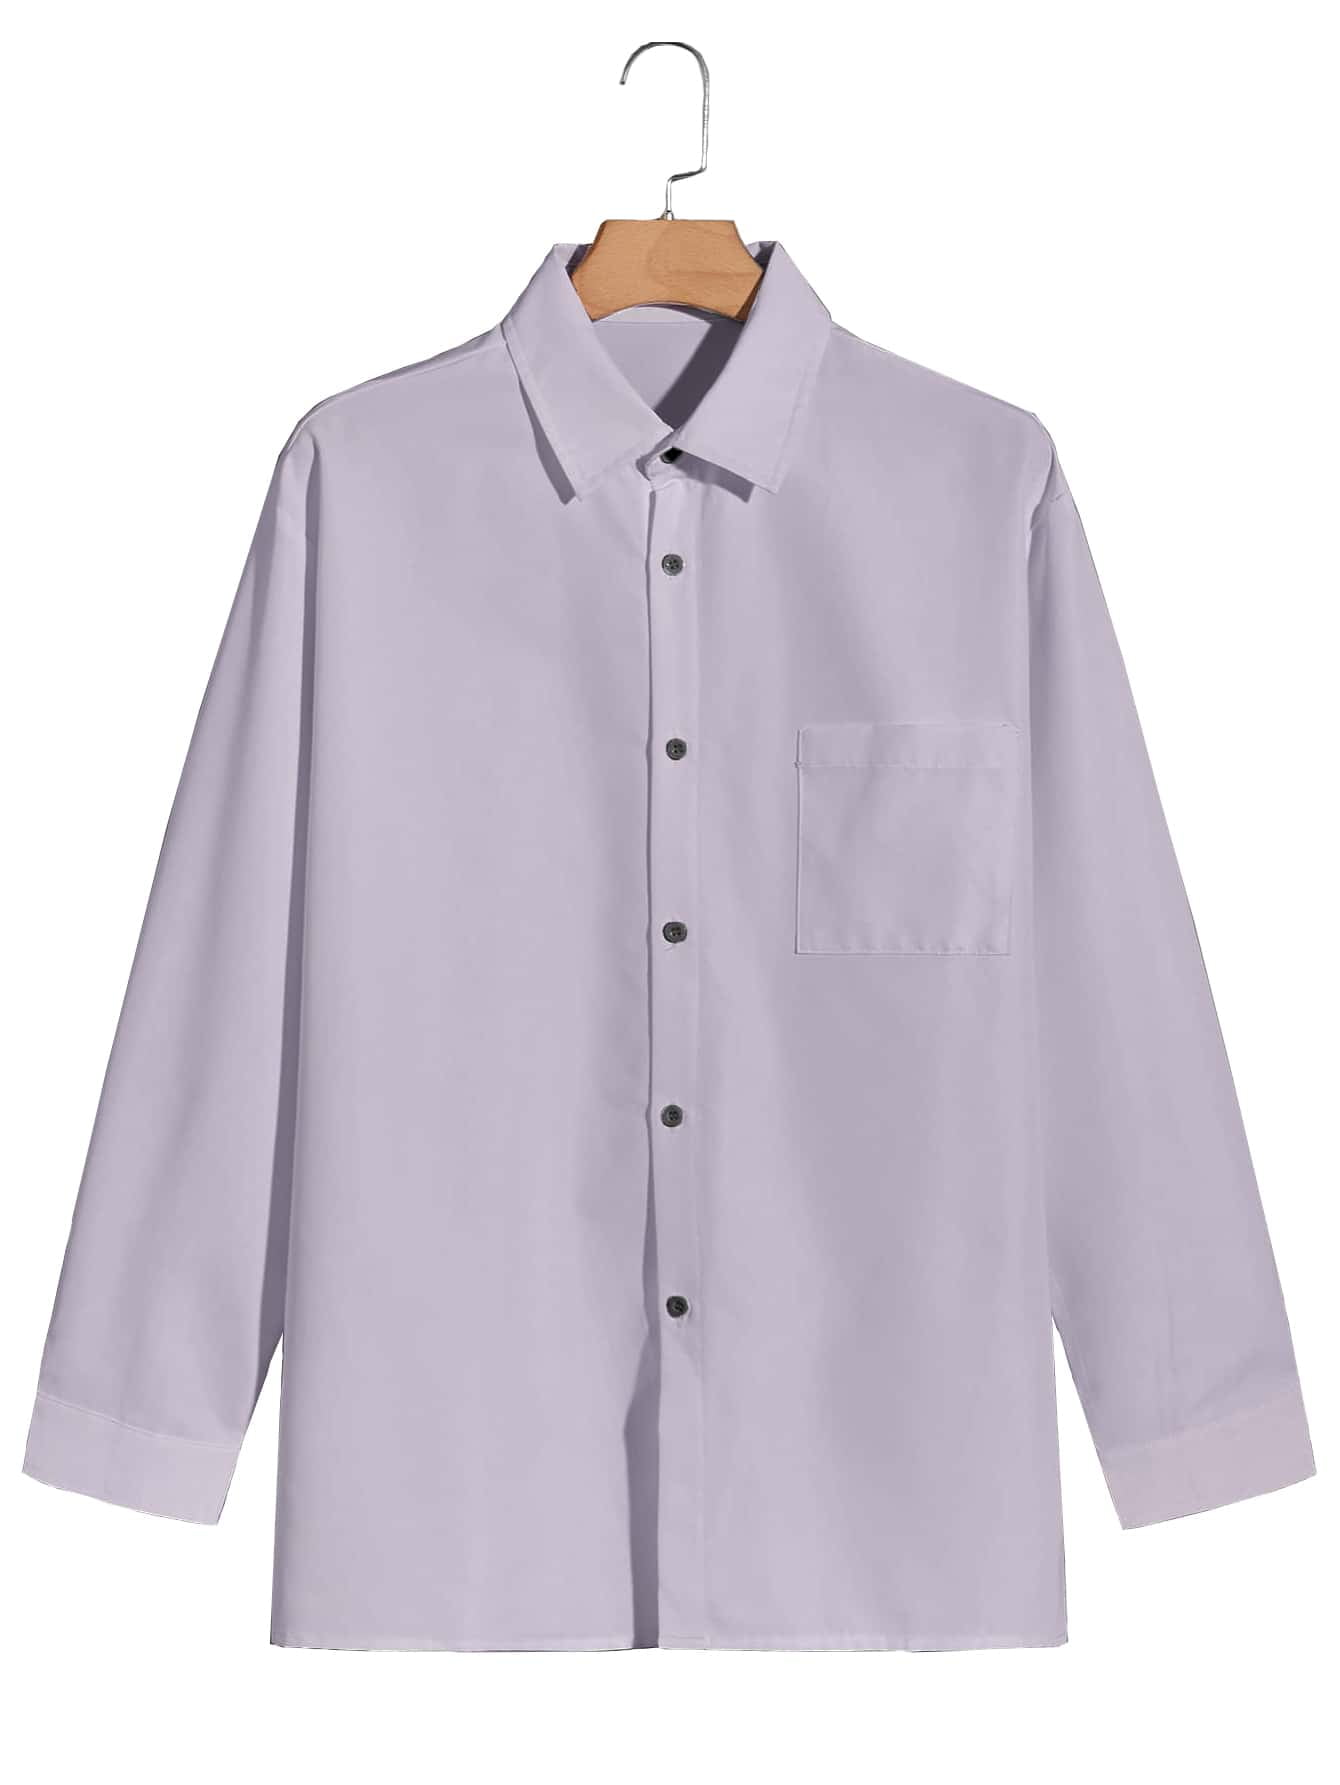 BYWX Men Long Sleeve Slim Fit Casual Solid Color Linen Button Down Dress Work Shirt 